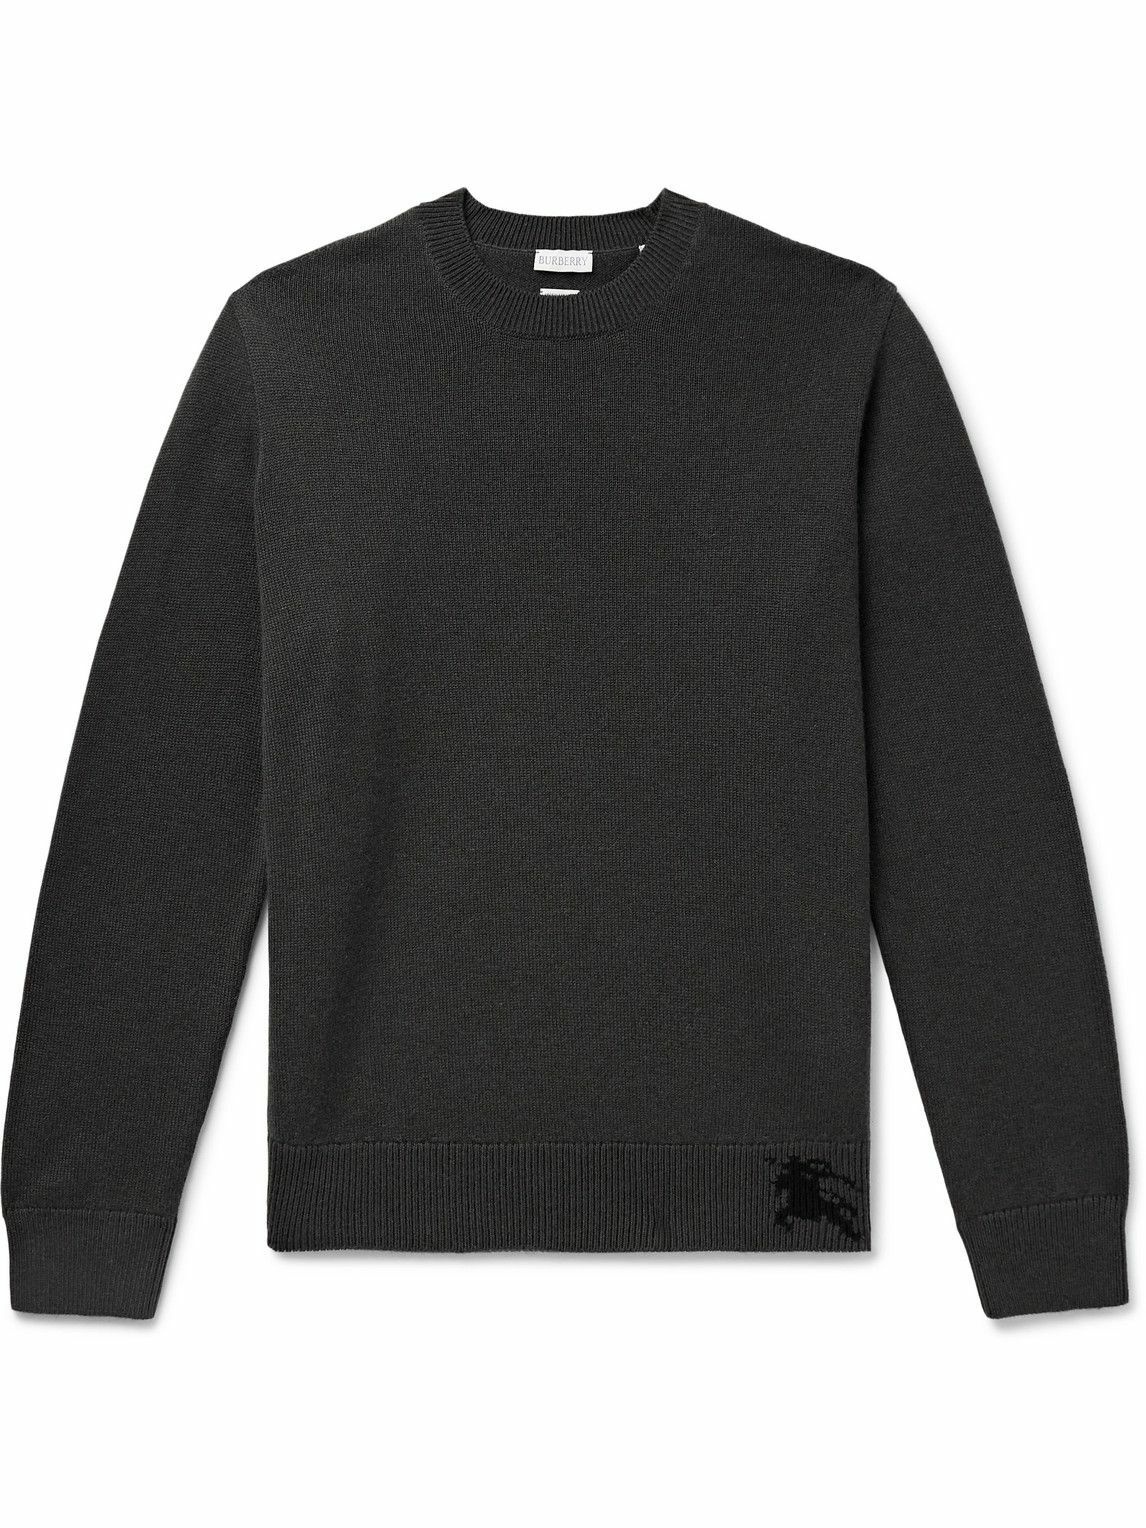 Burberry - Logo-Intarsia Cashmere Sweater - Gray Burberry